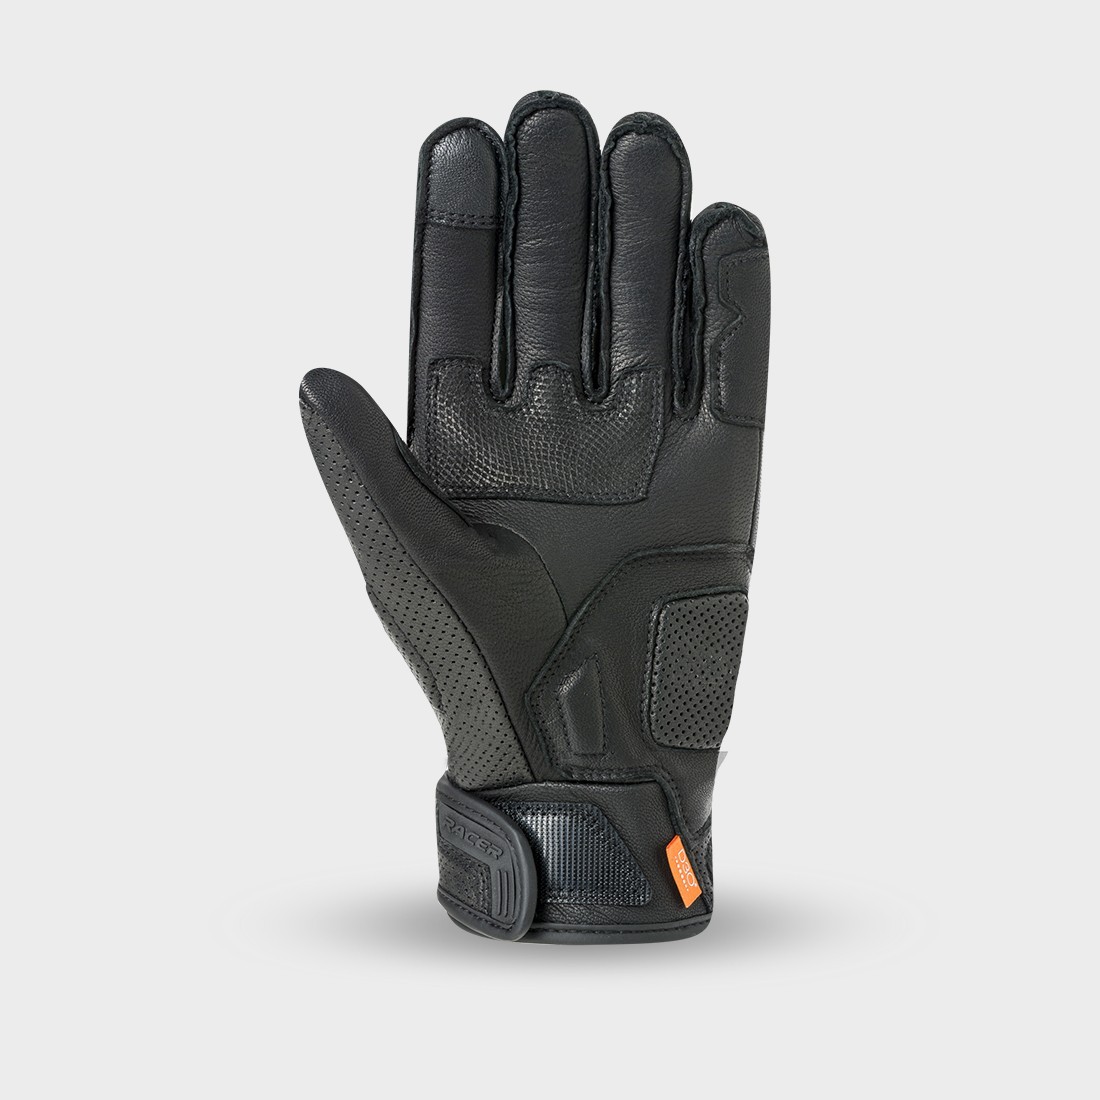 SPRINT 2 - バイクレーサーの手袋